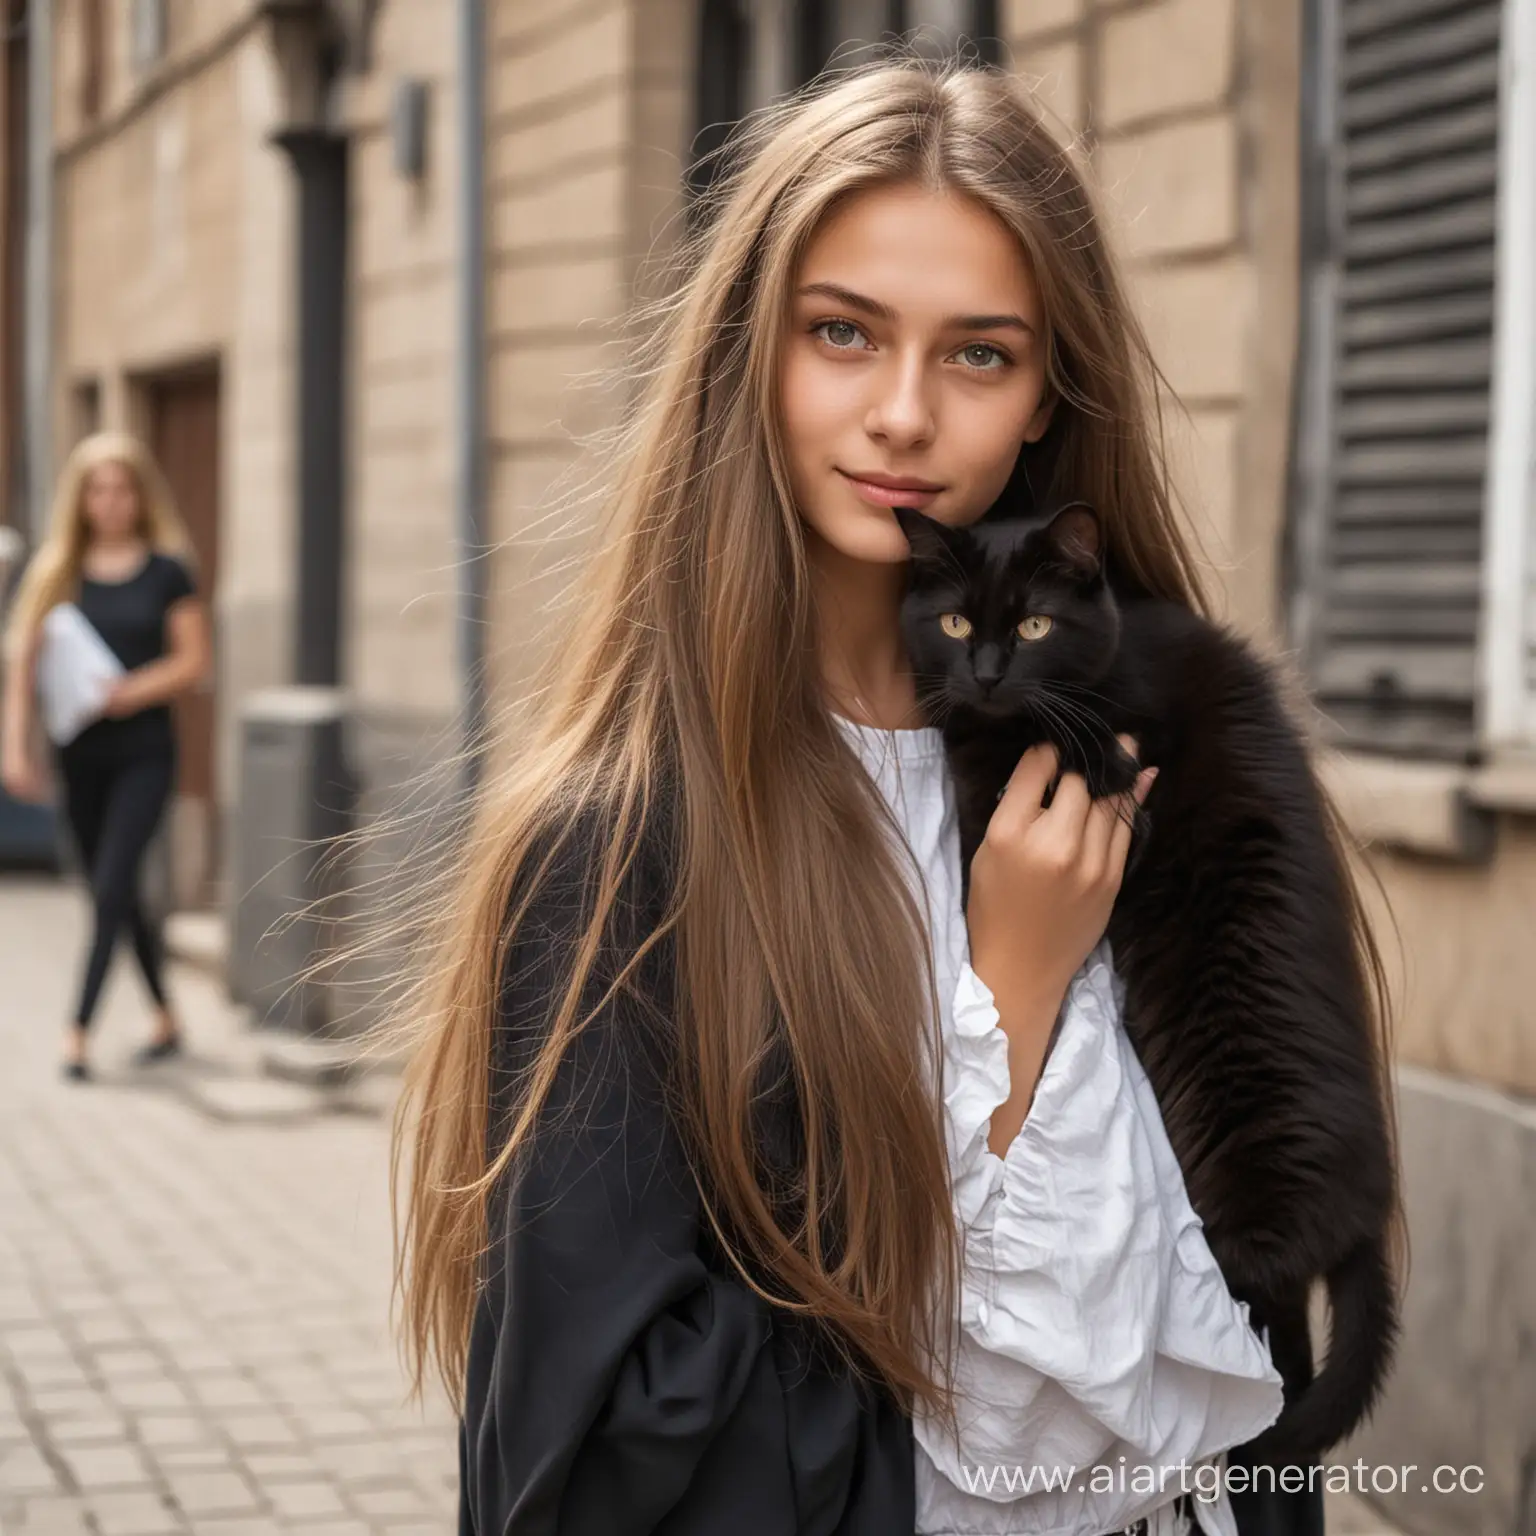 RussianJewish-Summer-Street-Style-Tall-Slim-Girl-and-Black-Cat